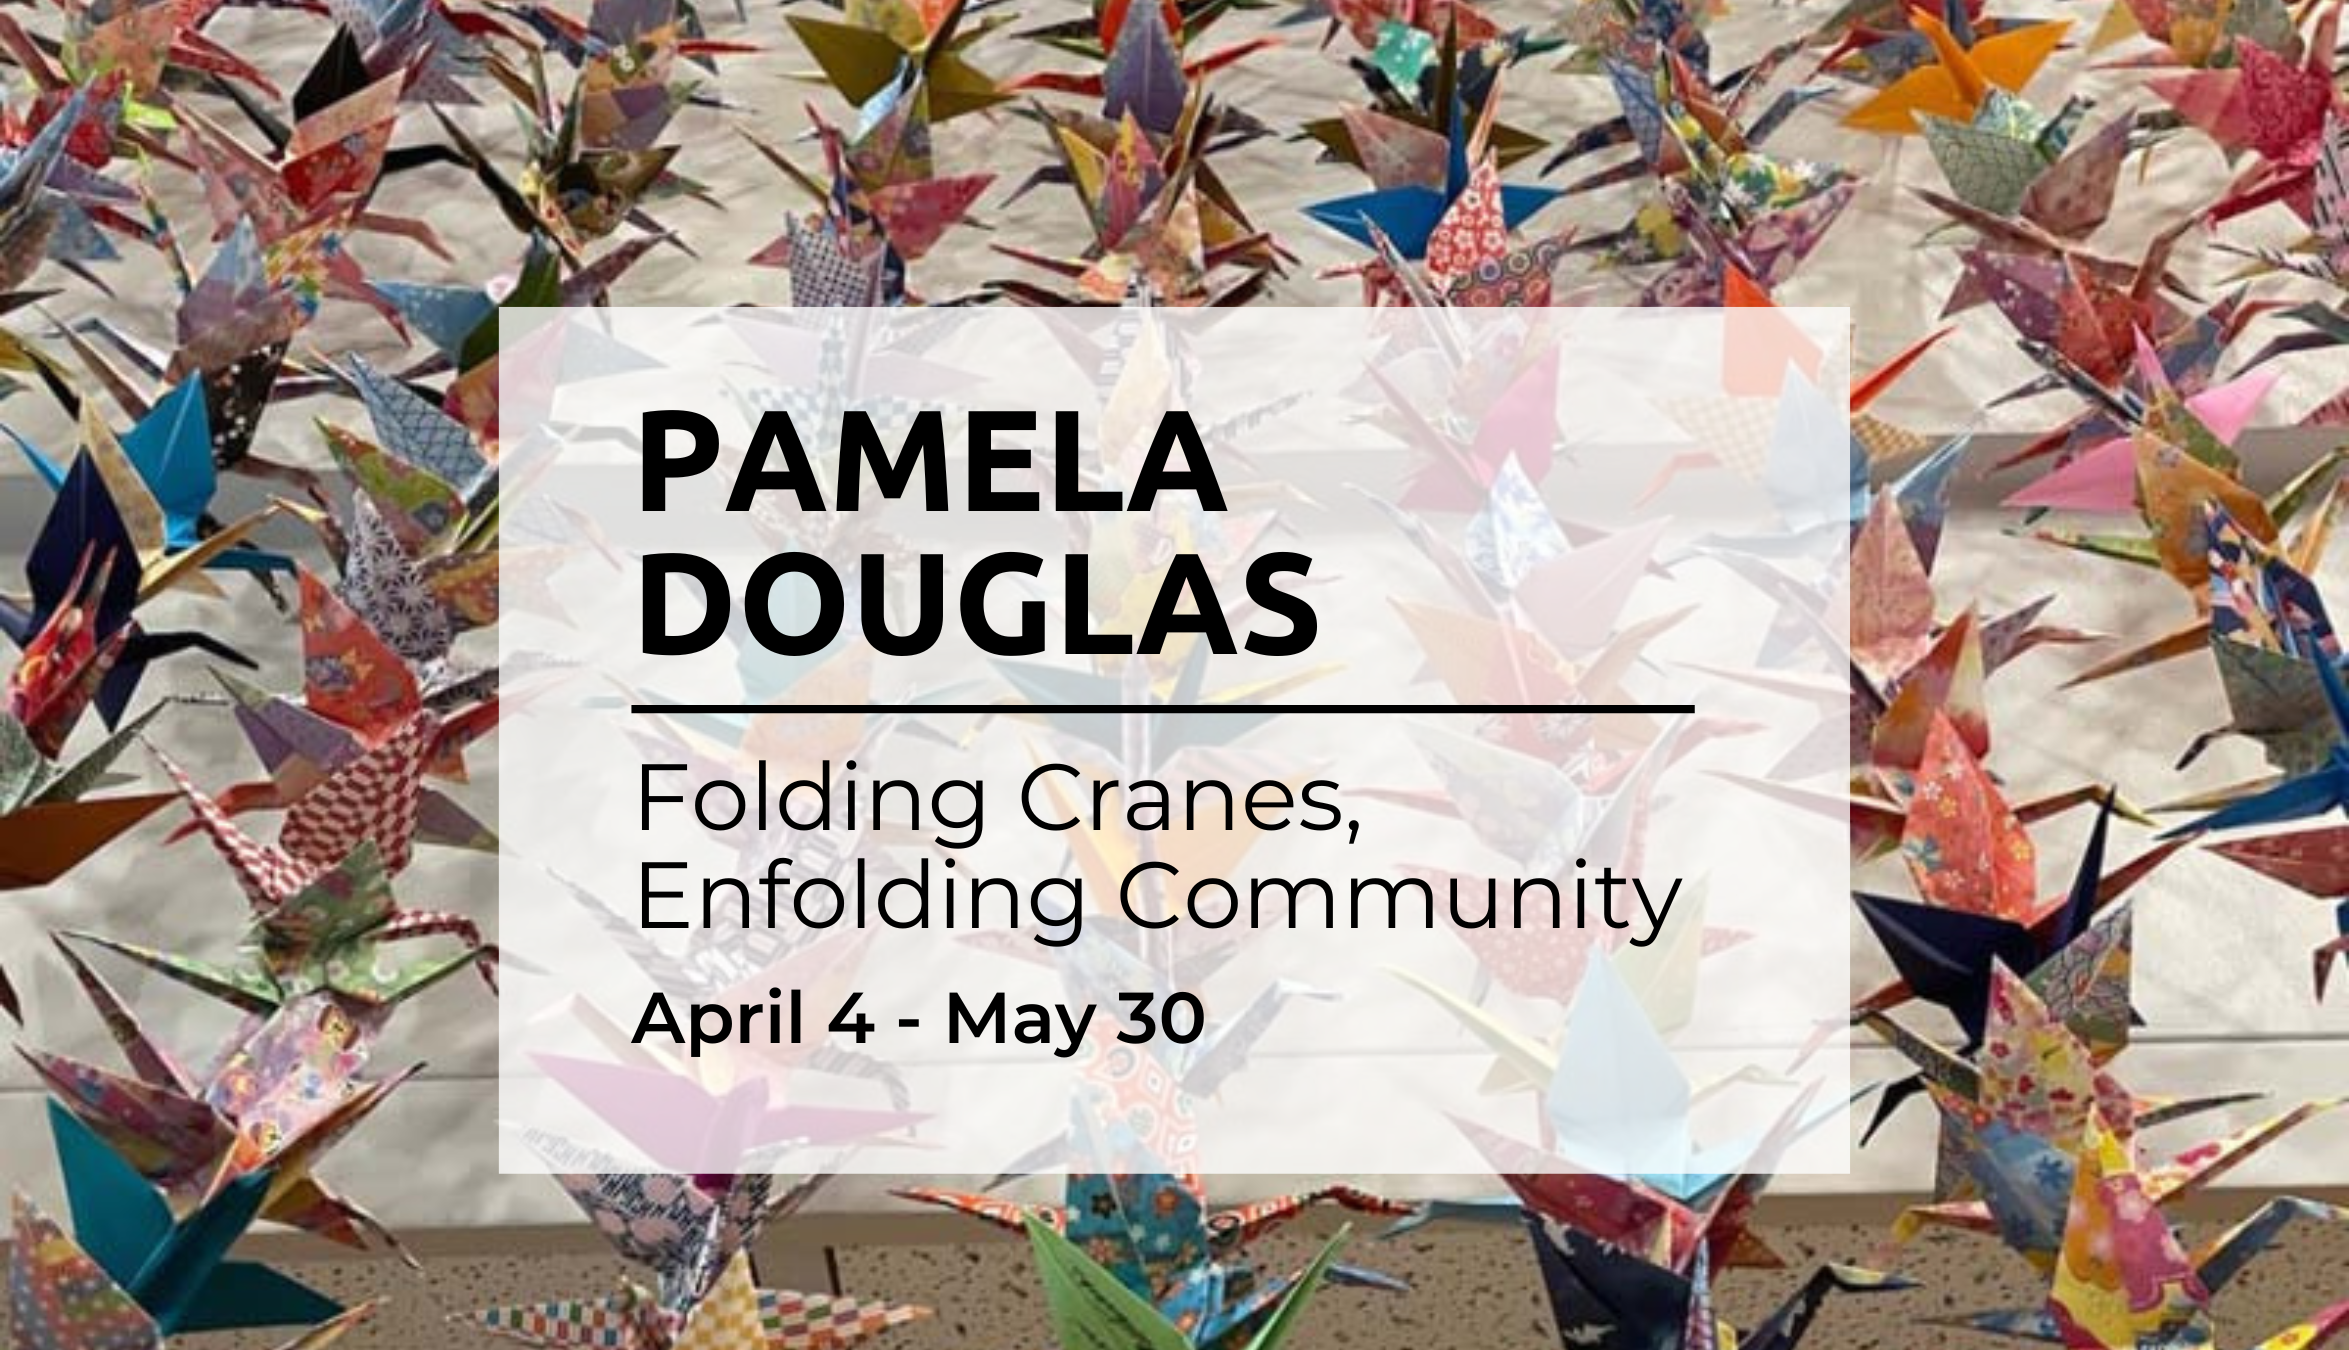 On Exhibit: "Folding Cranes, Enfolding Community"